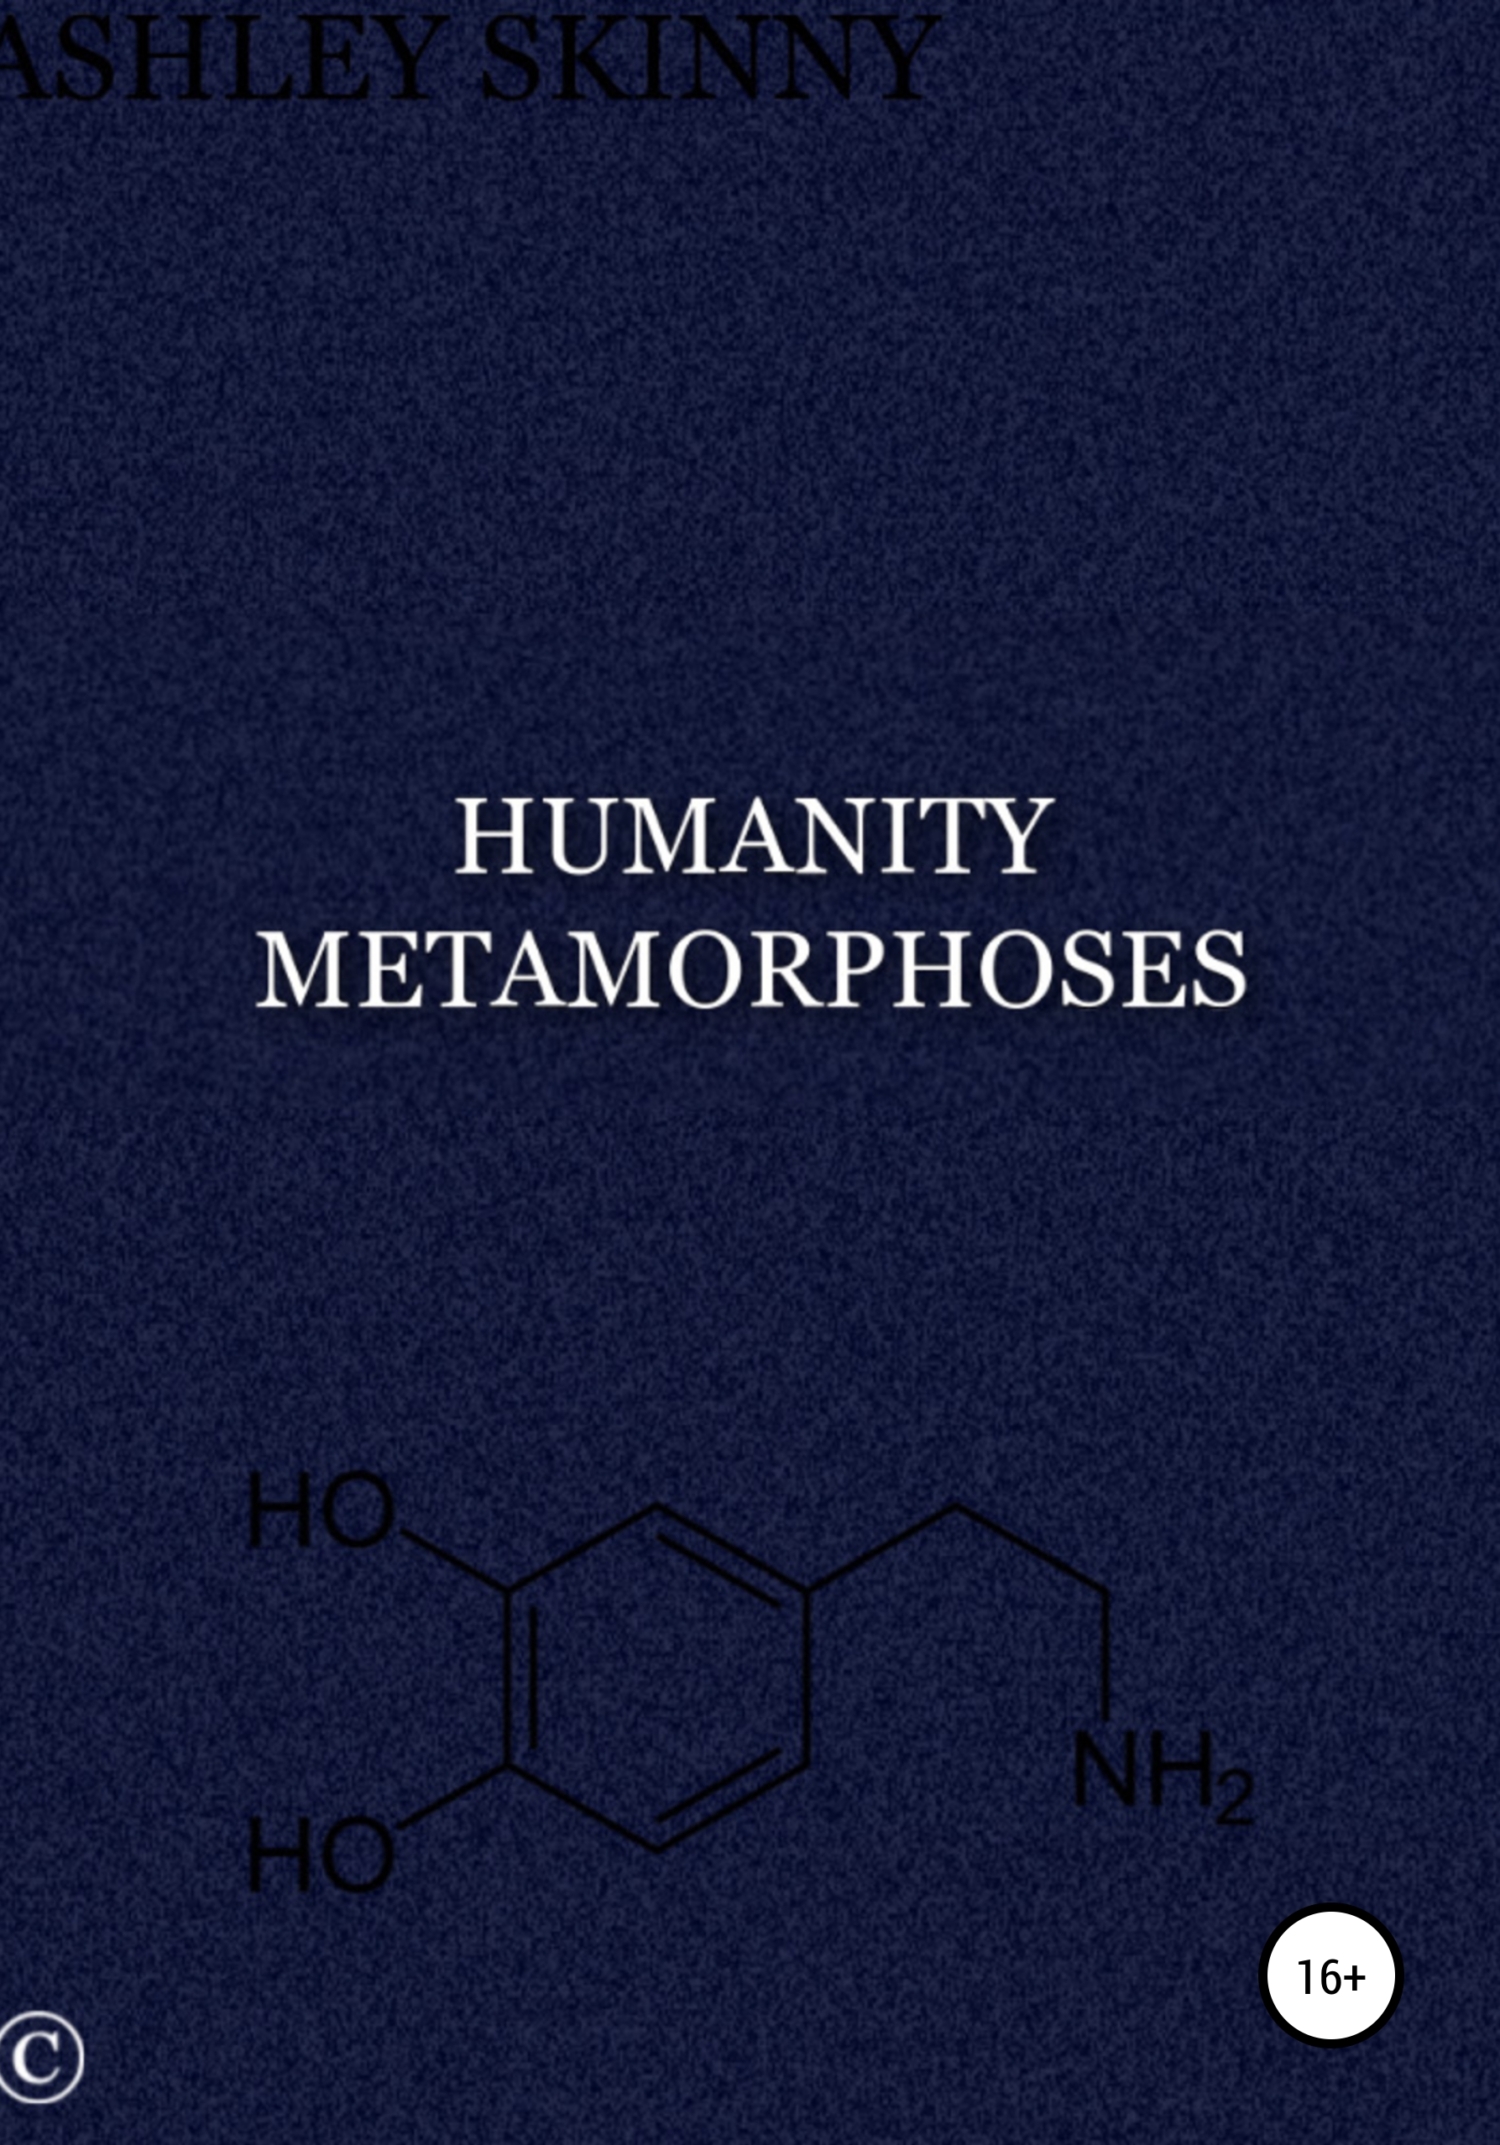 Humanity metamorphoses - Ashley Skinny